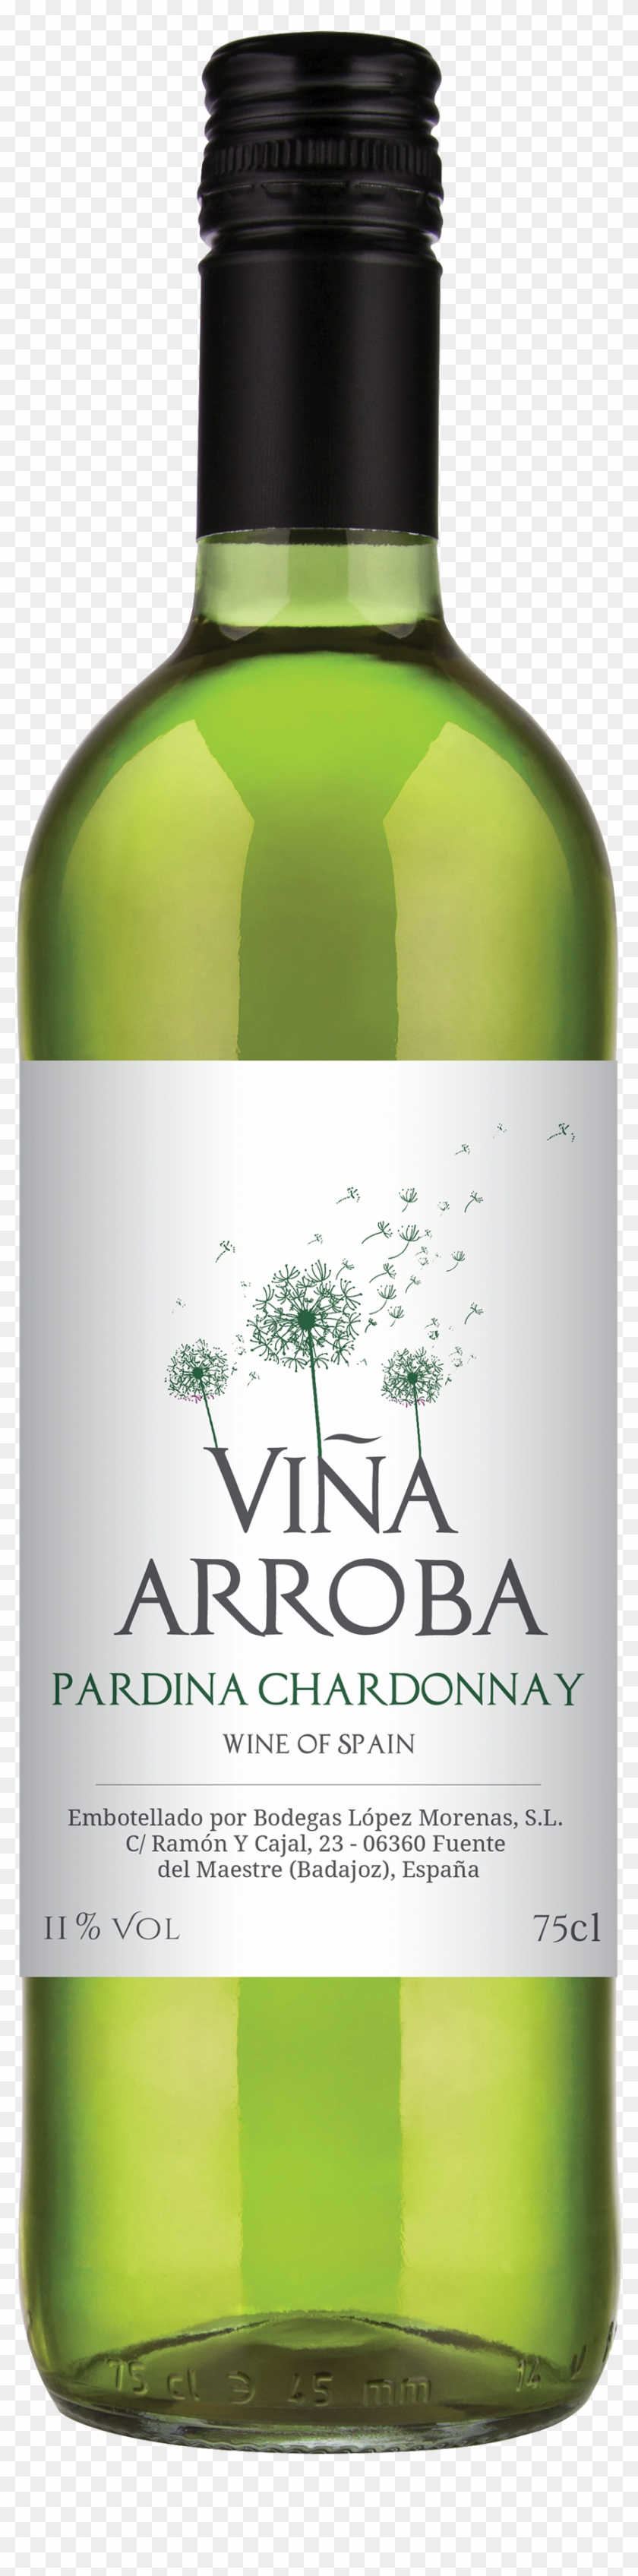 Product Information Downloads - Vina Arroba Pardina Chardonnay Clipart